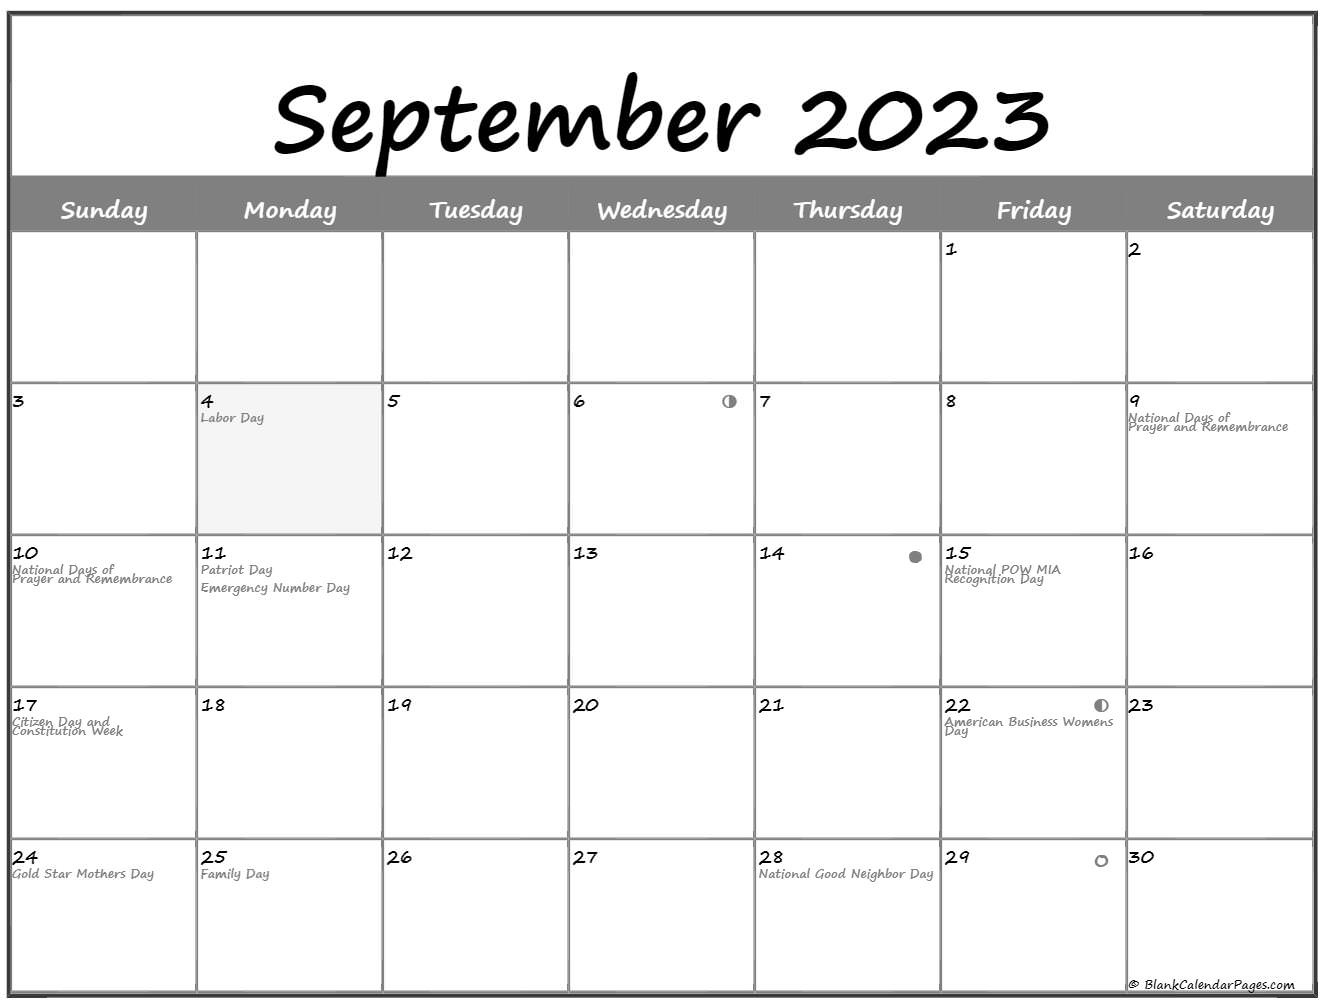 cobb-county-calendar-2022-23-customize-and-print